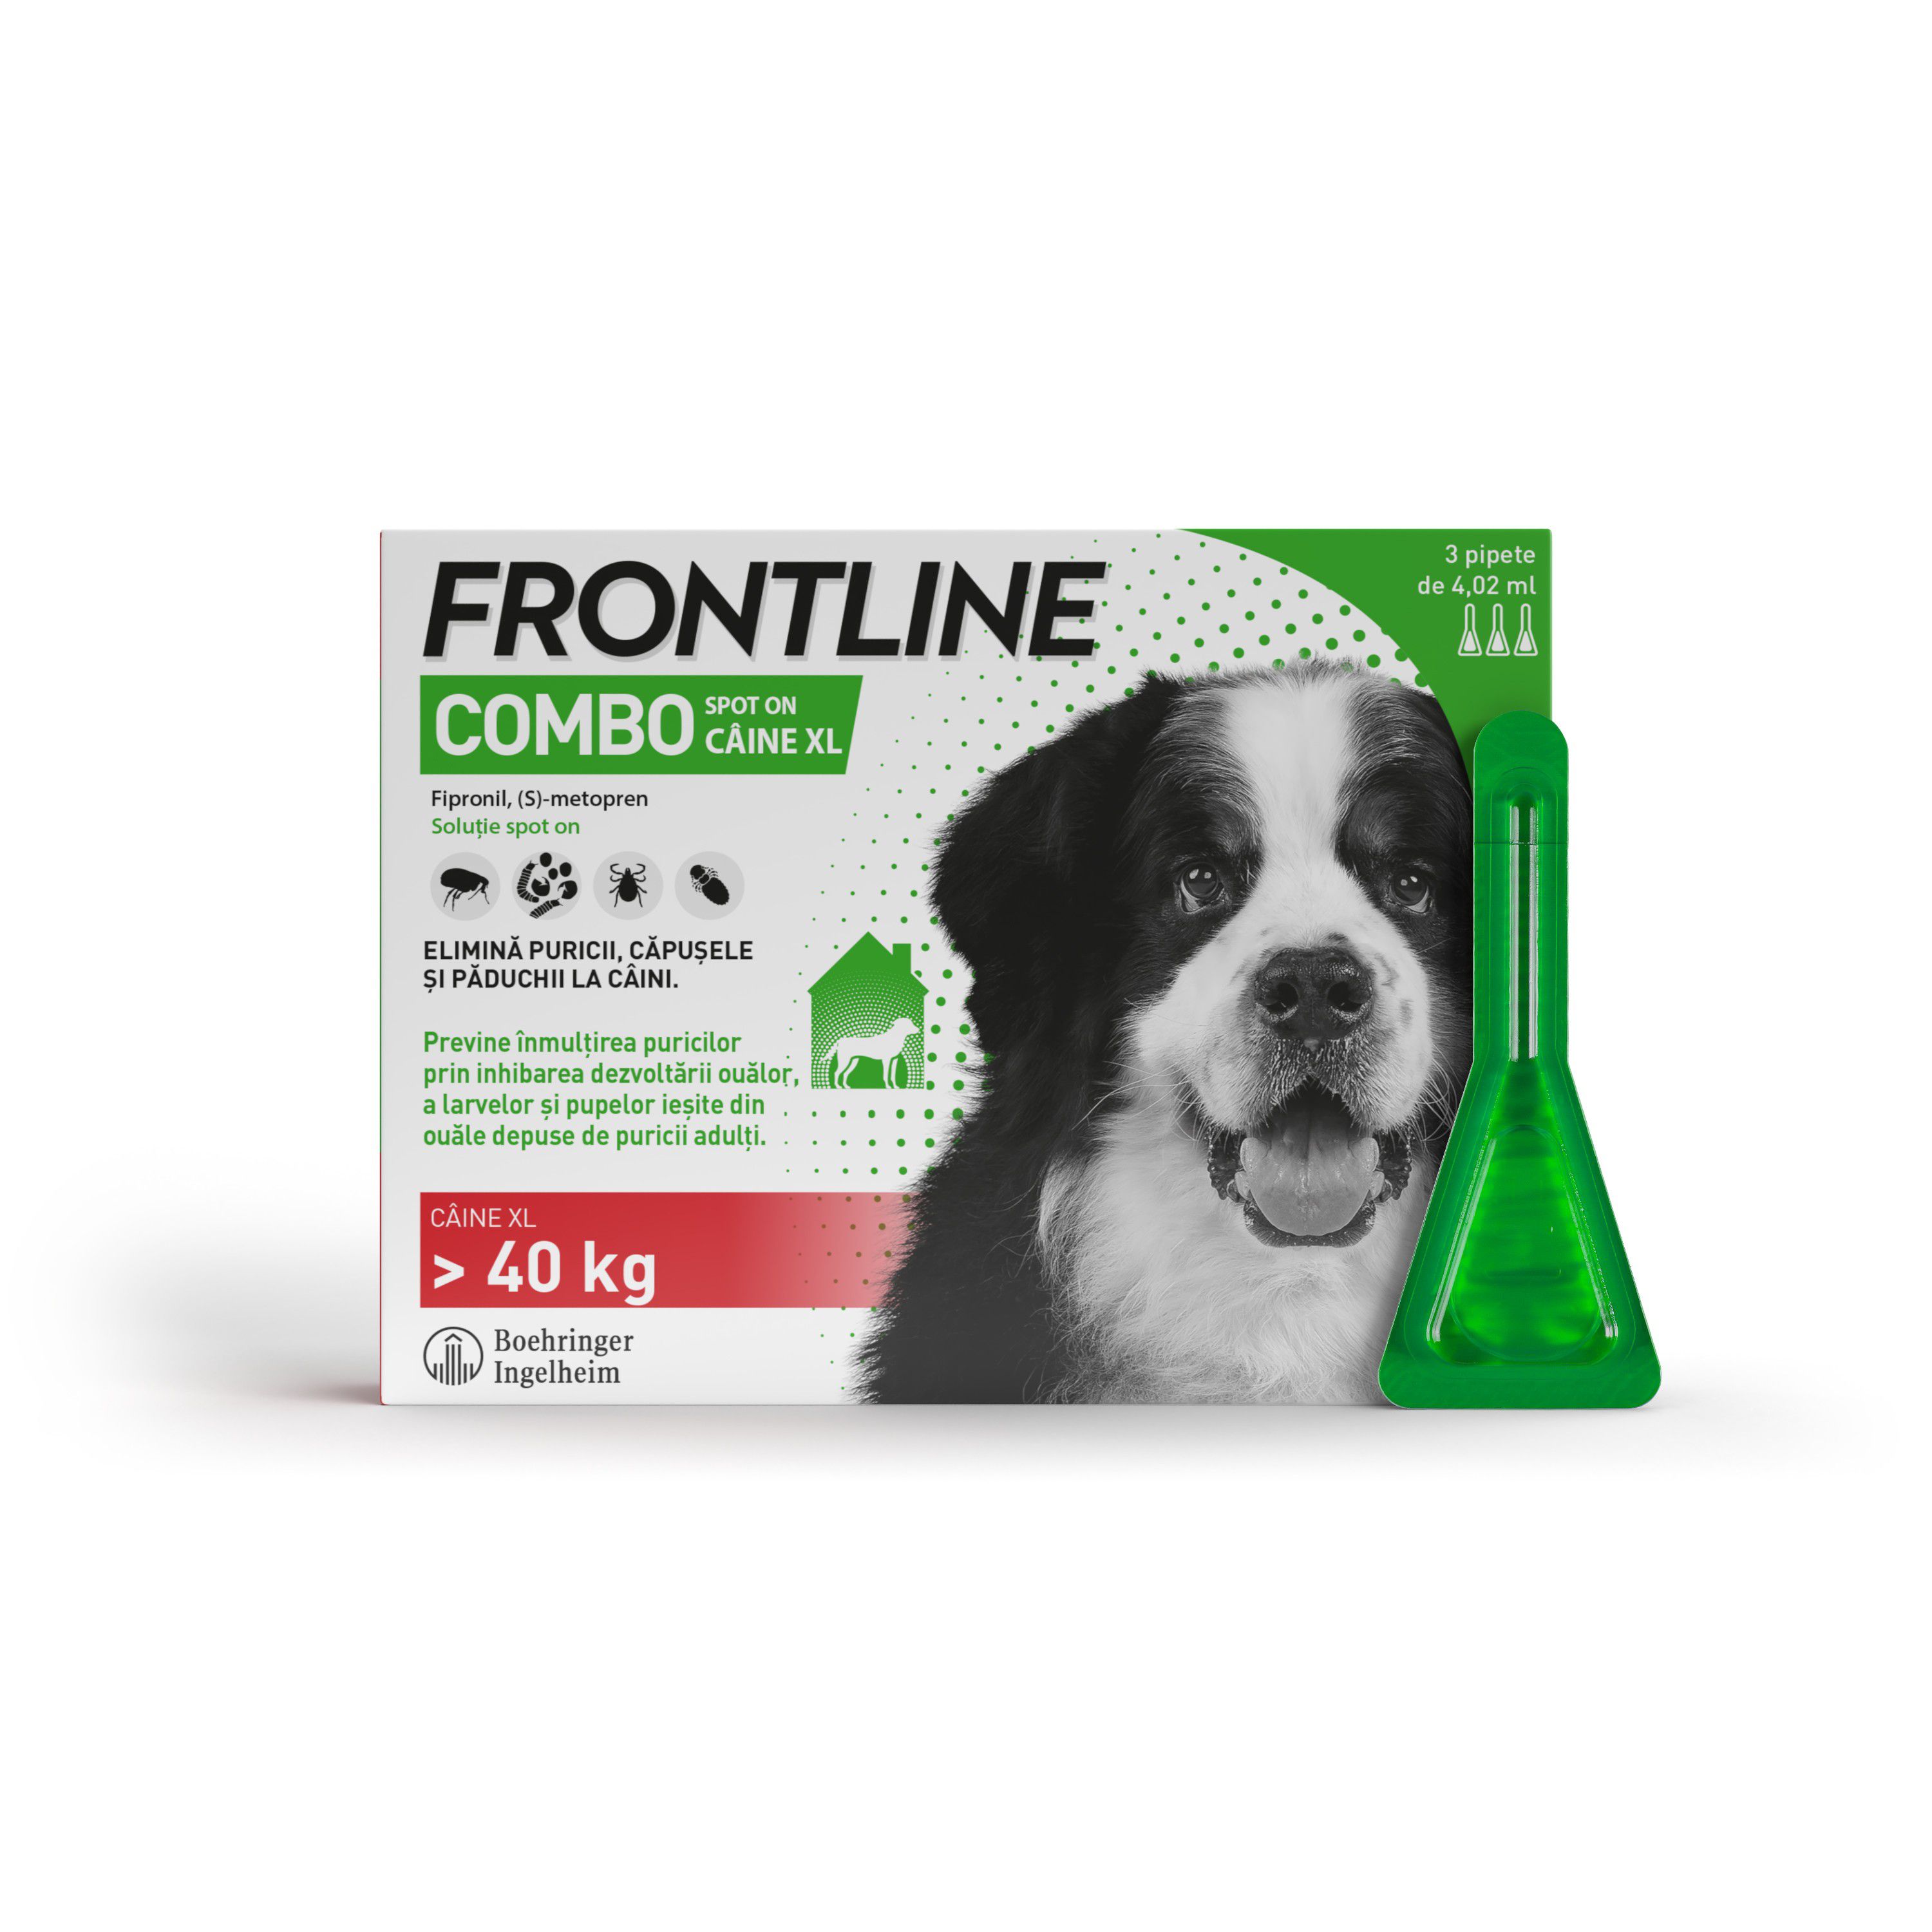 Frontline Combo Spot On câine XL – pipetă verde de 4,05 ml, 3 pipete, Frontline